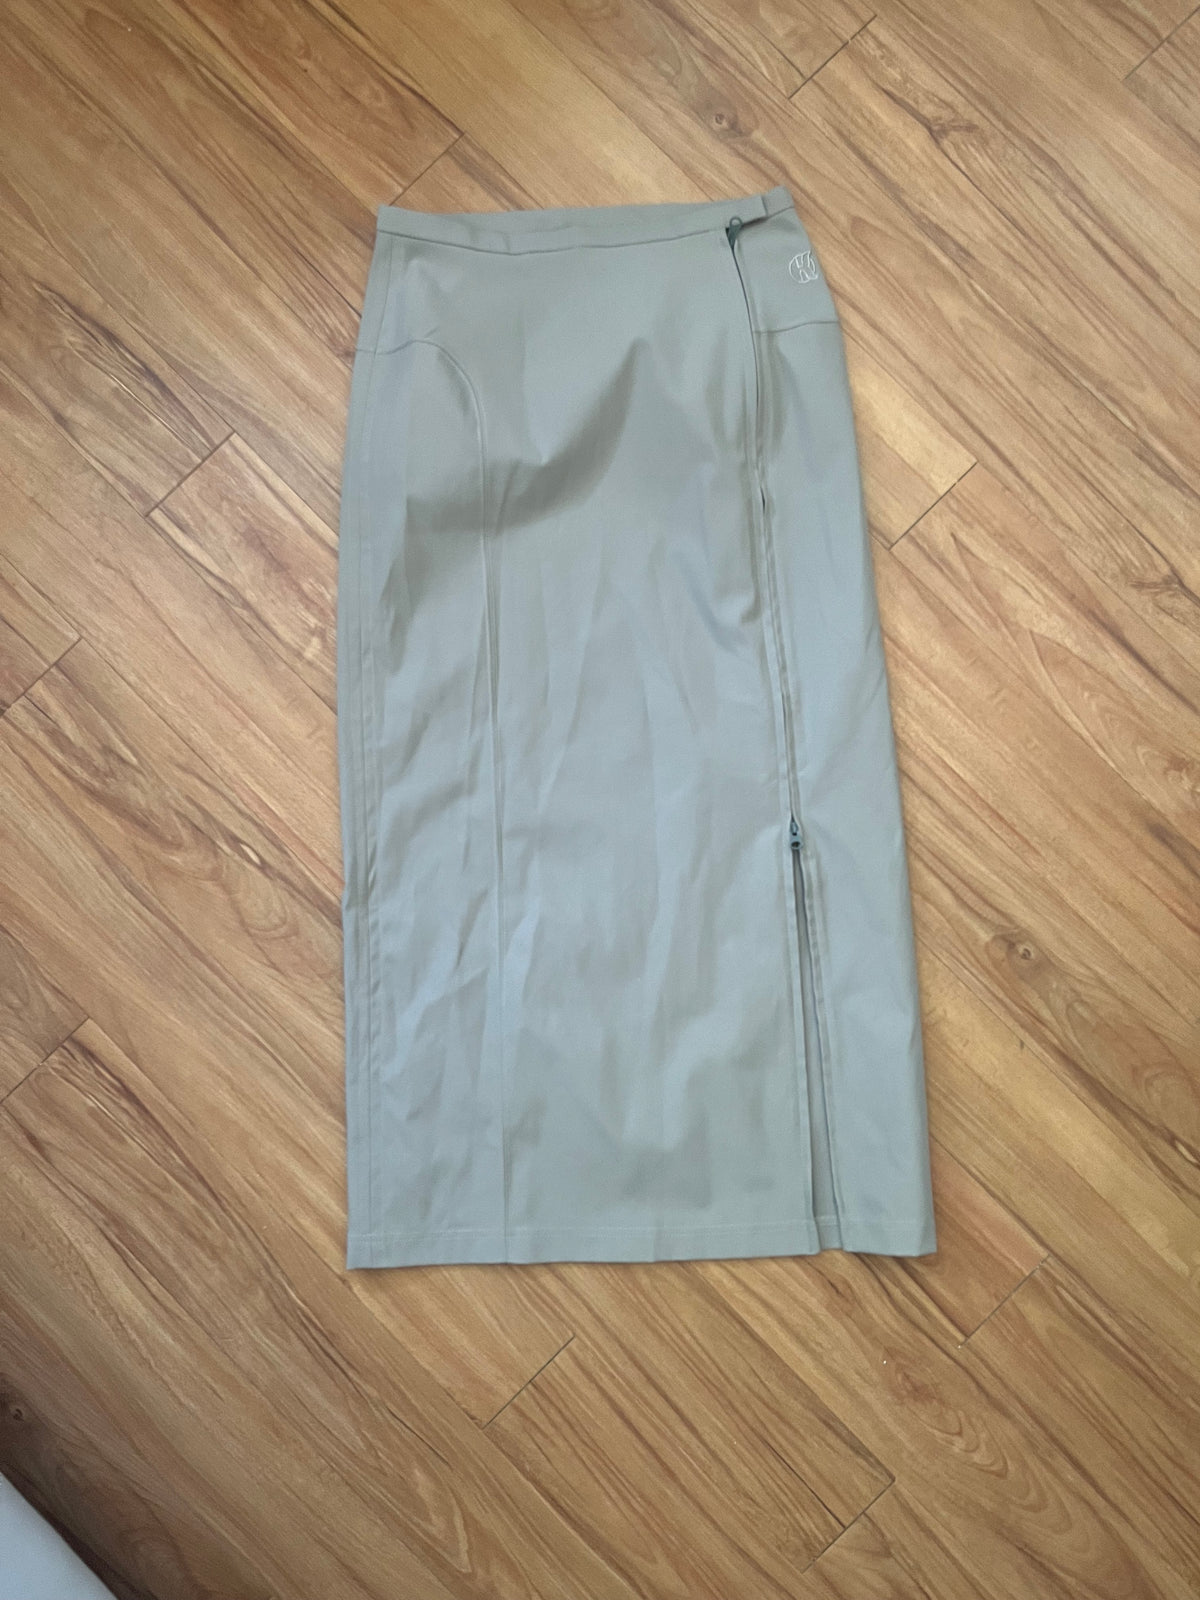 Tan/grey midi skirt